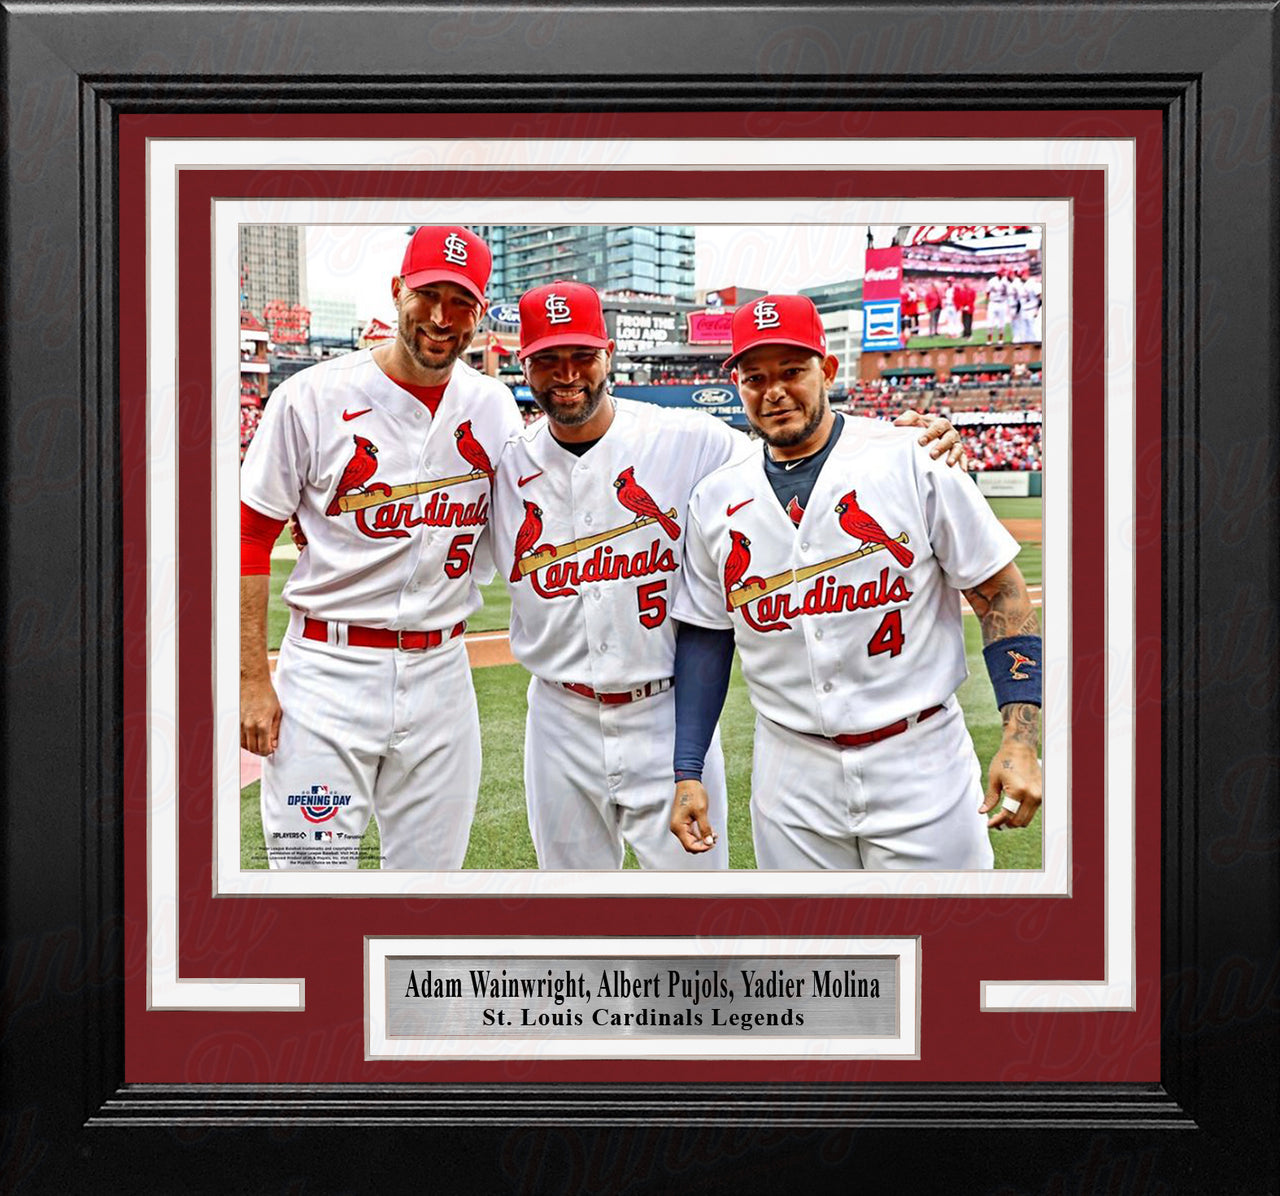 Adam Wainwright, Albert Pujols, & Yadier Molina St. Louis Cardinals 8" x 10" Framed Baseball Photo - Dynasty Sports & Framing 